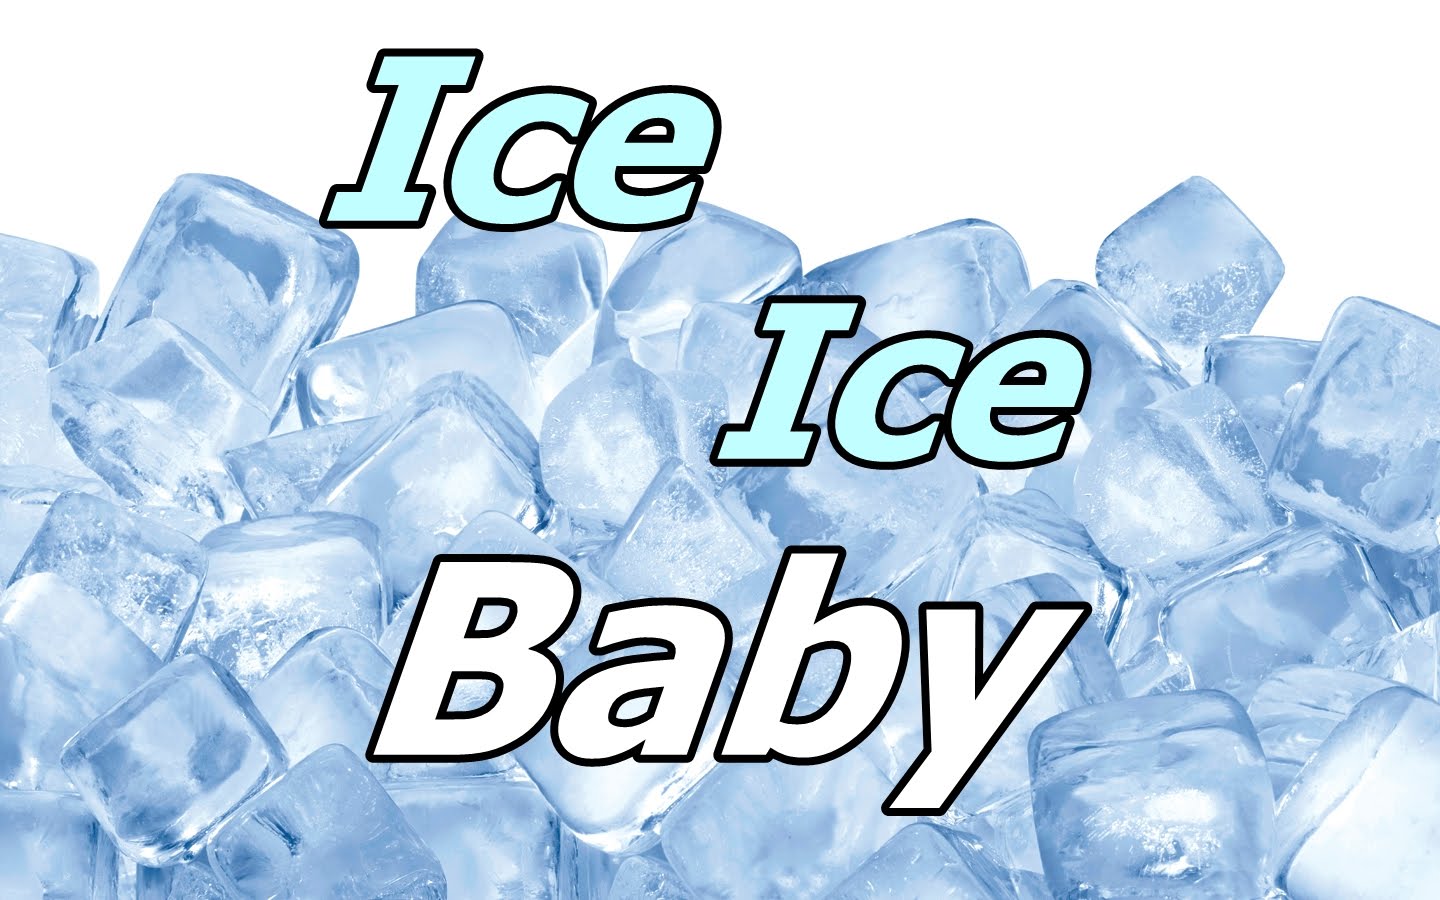 Через айс. Ice Baby. Ice Ice Ice Baby. Блэкберн айс бэби. Ice Baby табак.